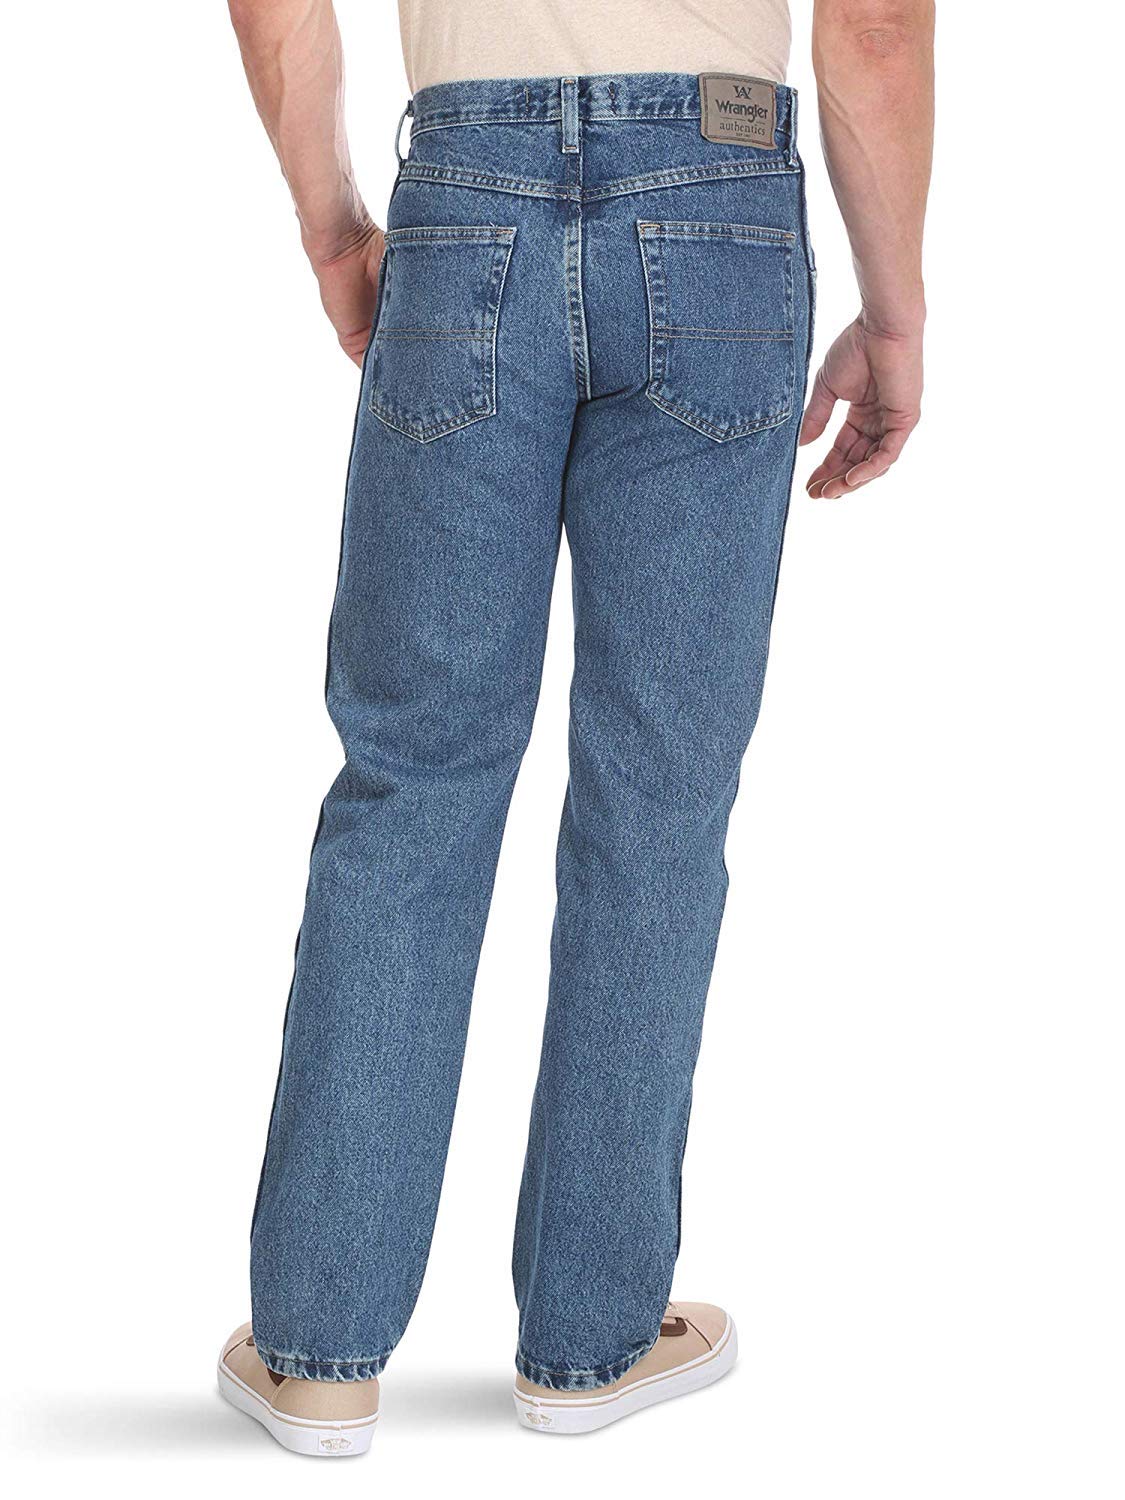 Wrangler Authentics Men's Classic 5-Pocket Regular Fit Cotton Jean, Stonewash Mid, 42W x 34L